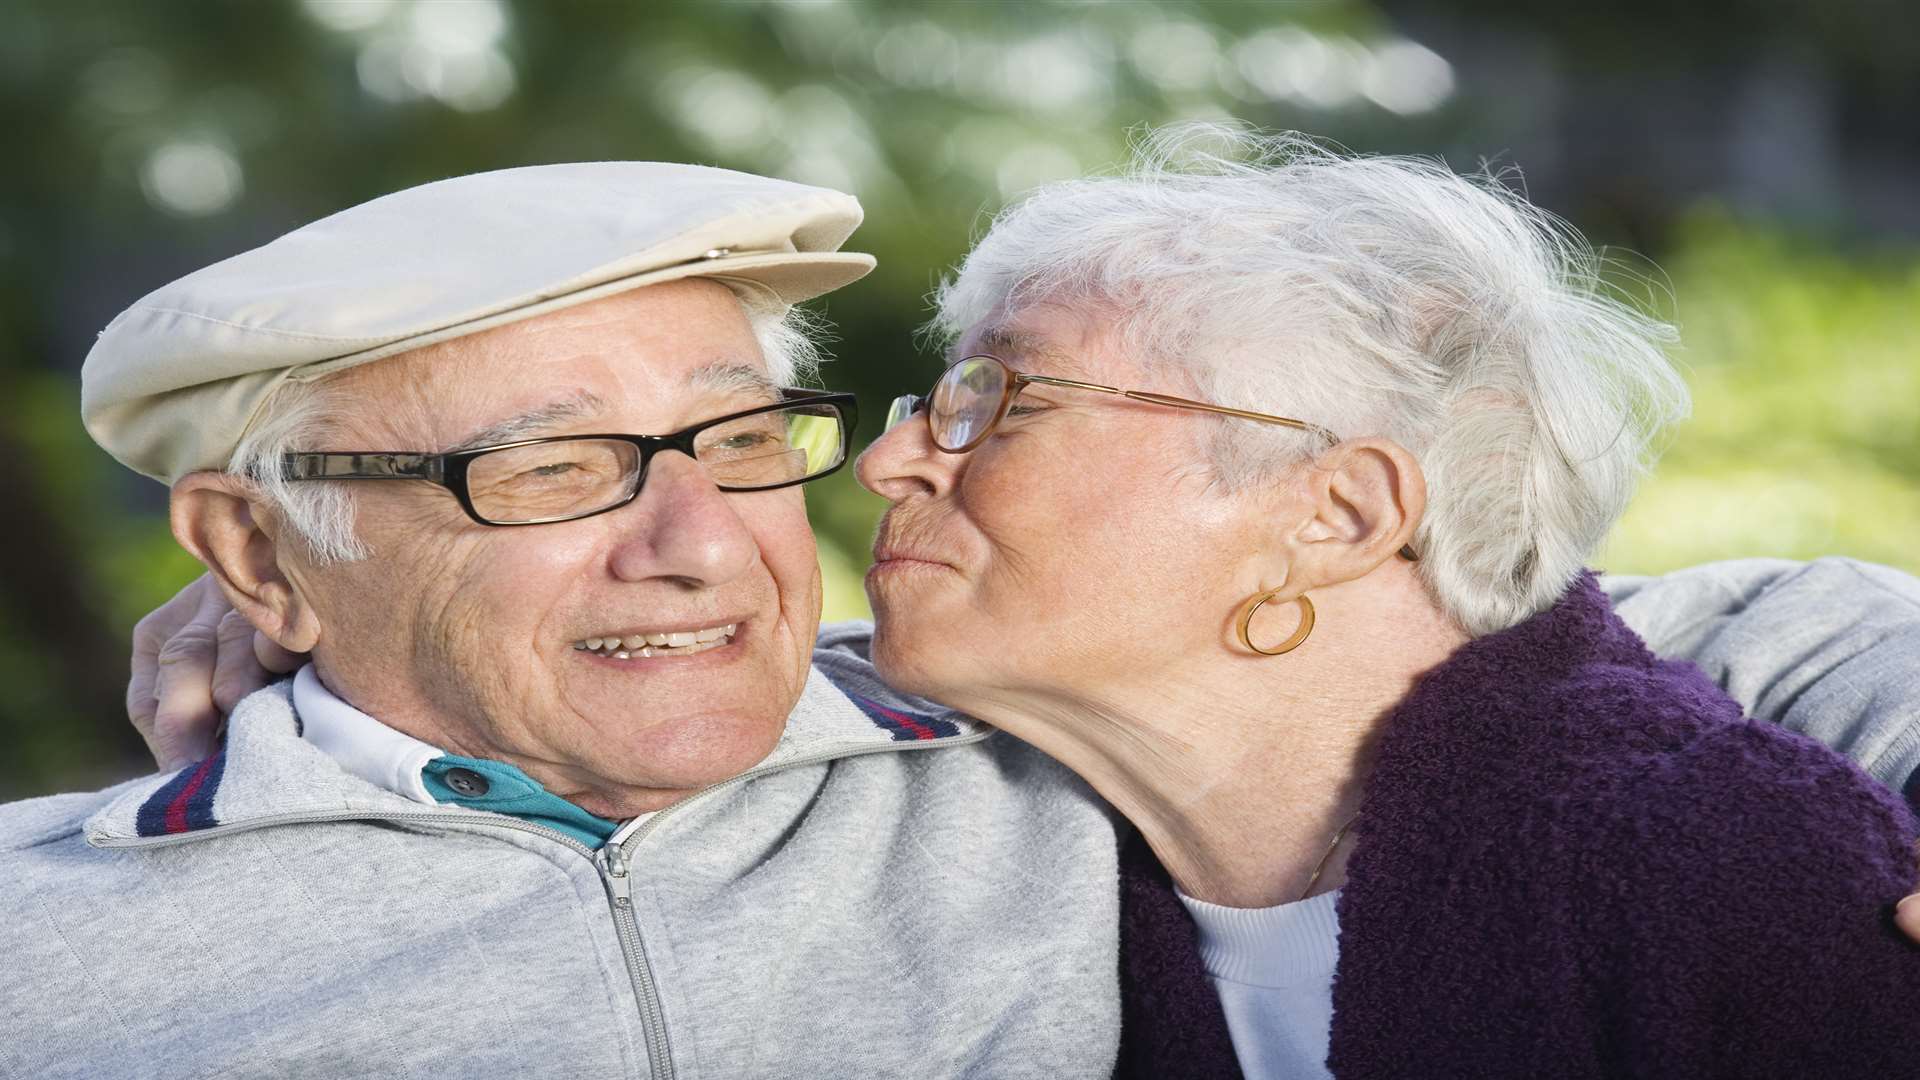 A romantic senior couple. Stock image